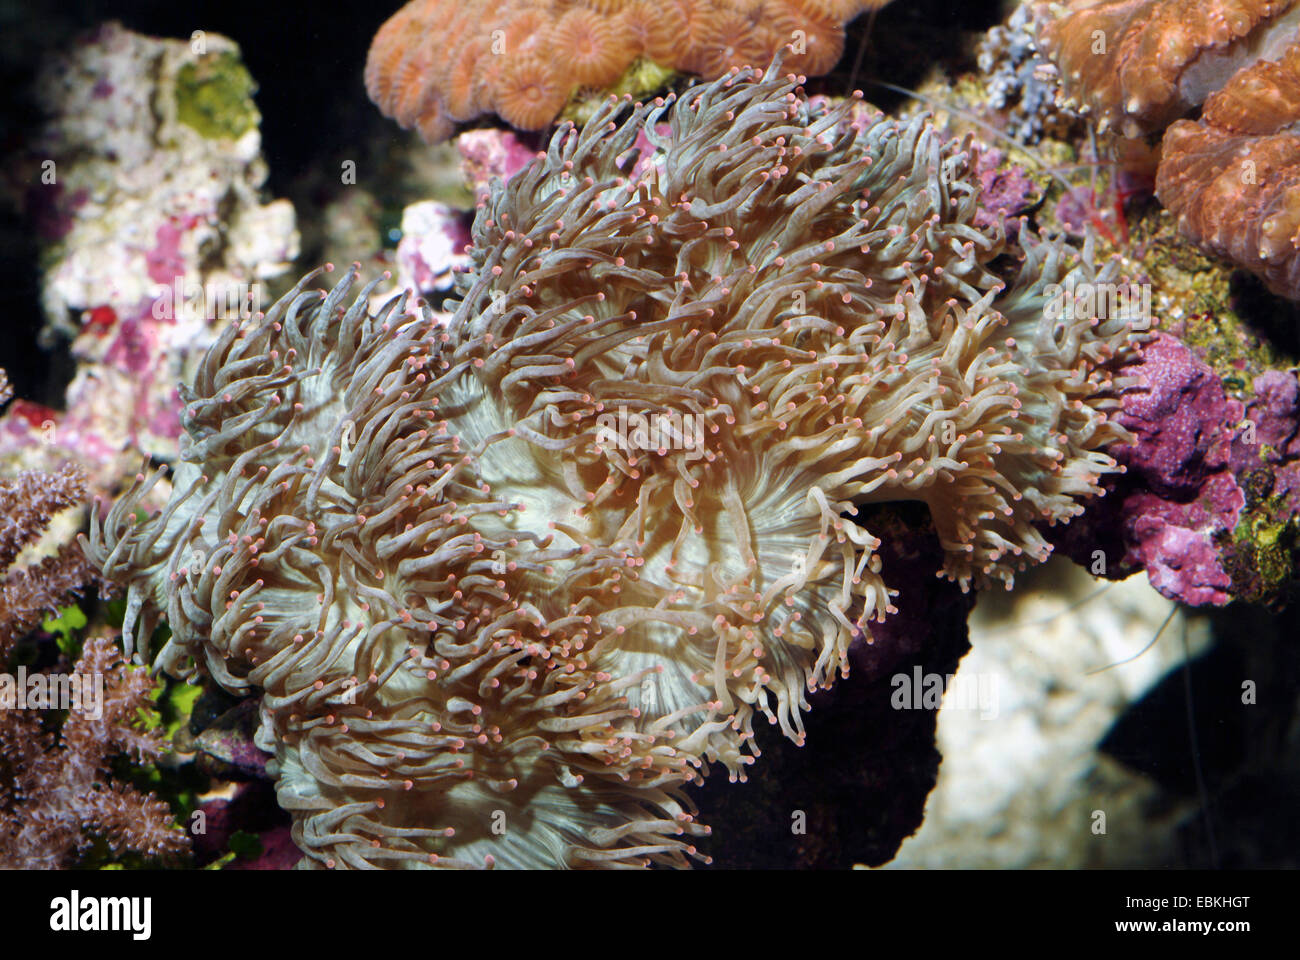 Catalaphyllia jardinei elegancia (Coral), colonie Foto de stock